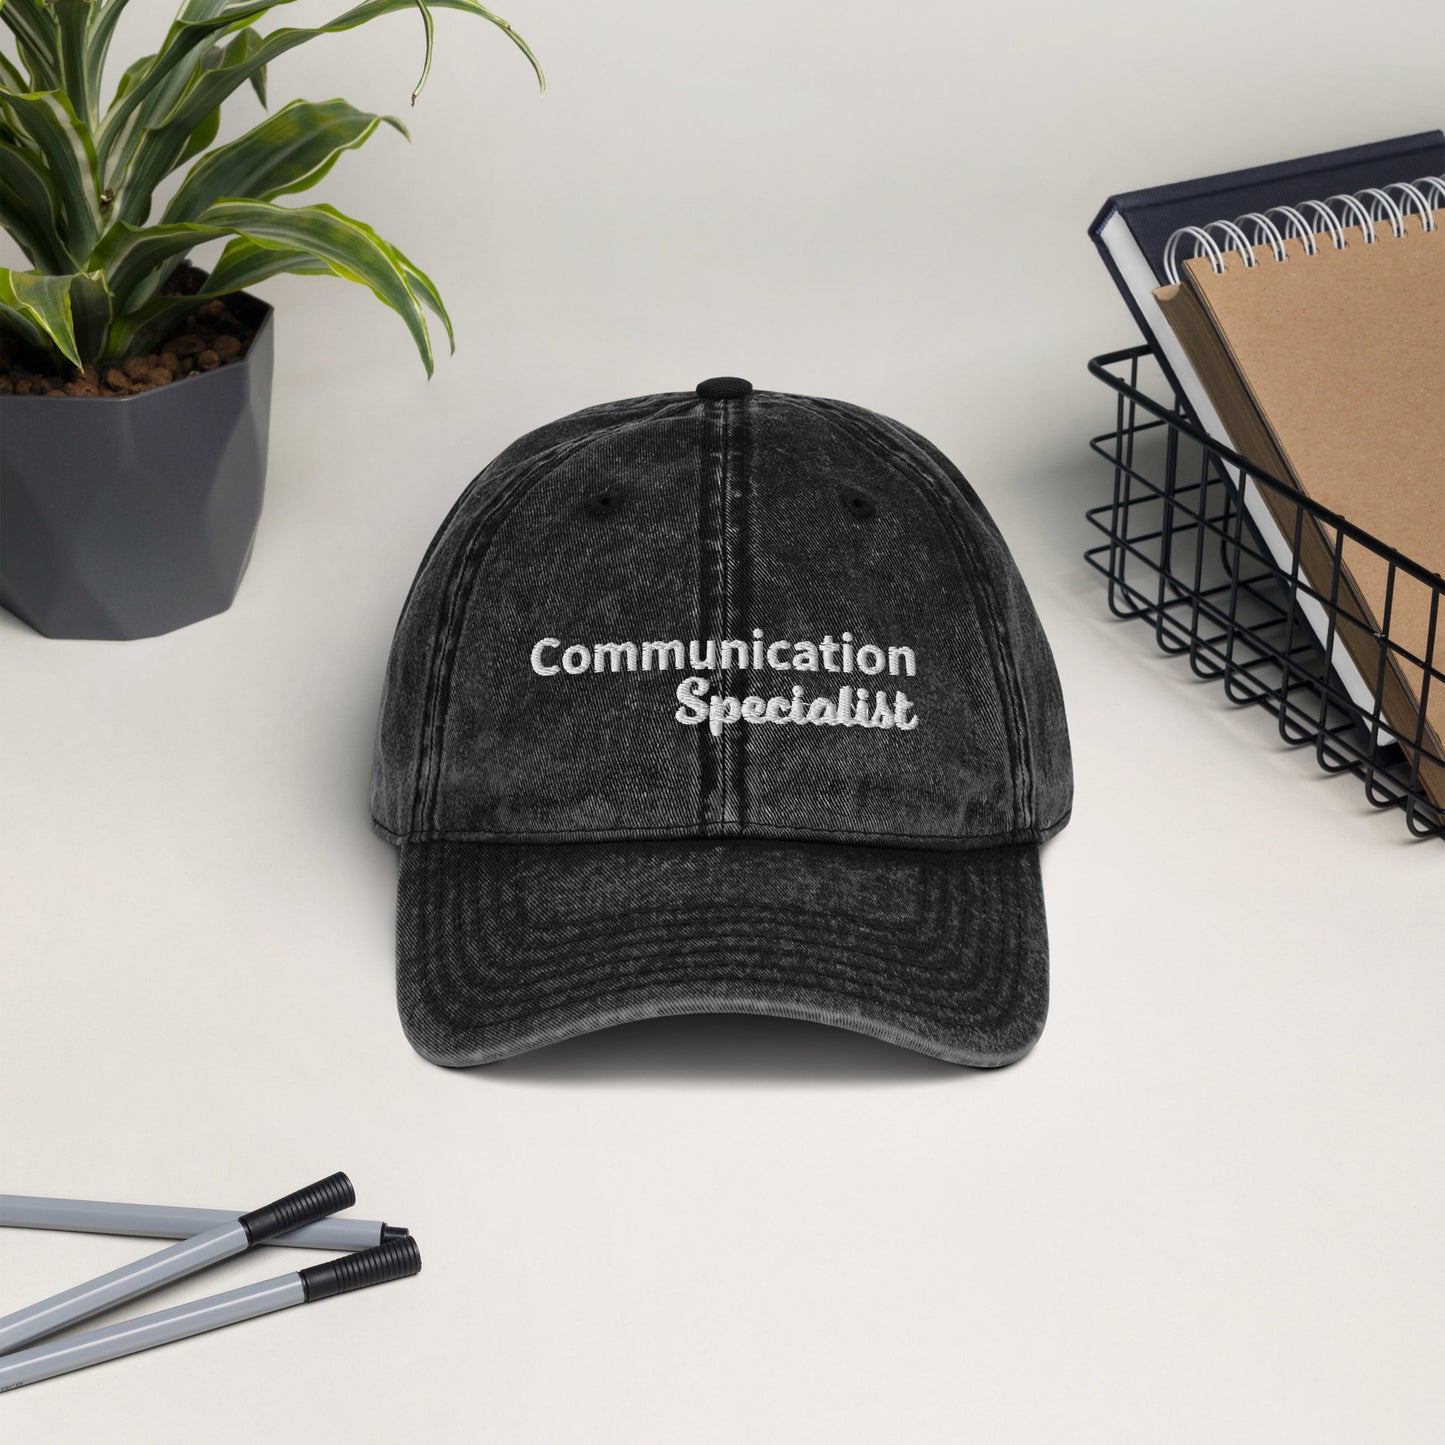 "Communication Specialist" Vintage Cotton Twill Cap